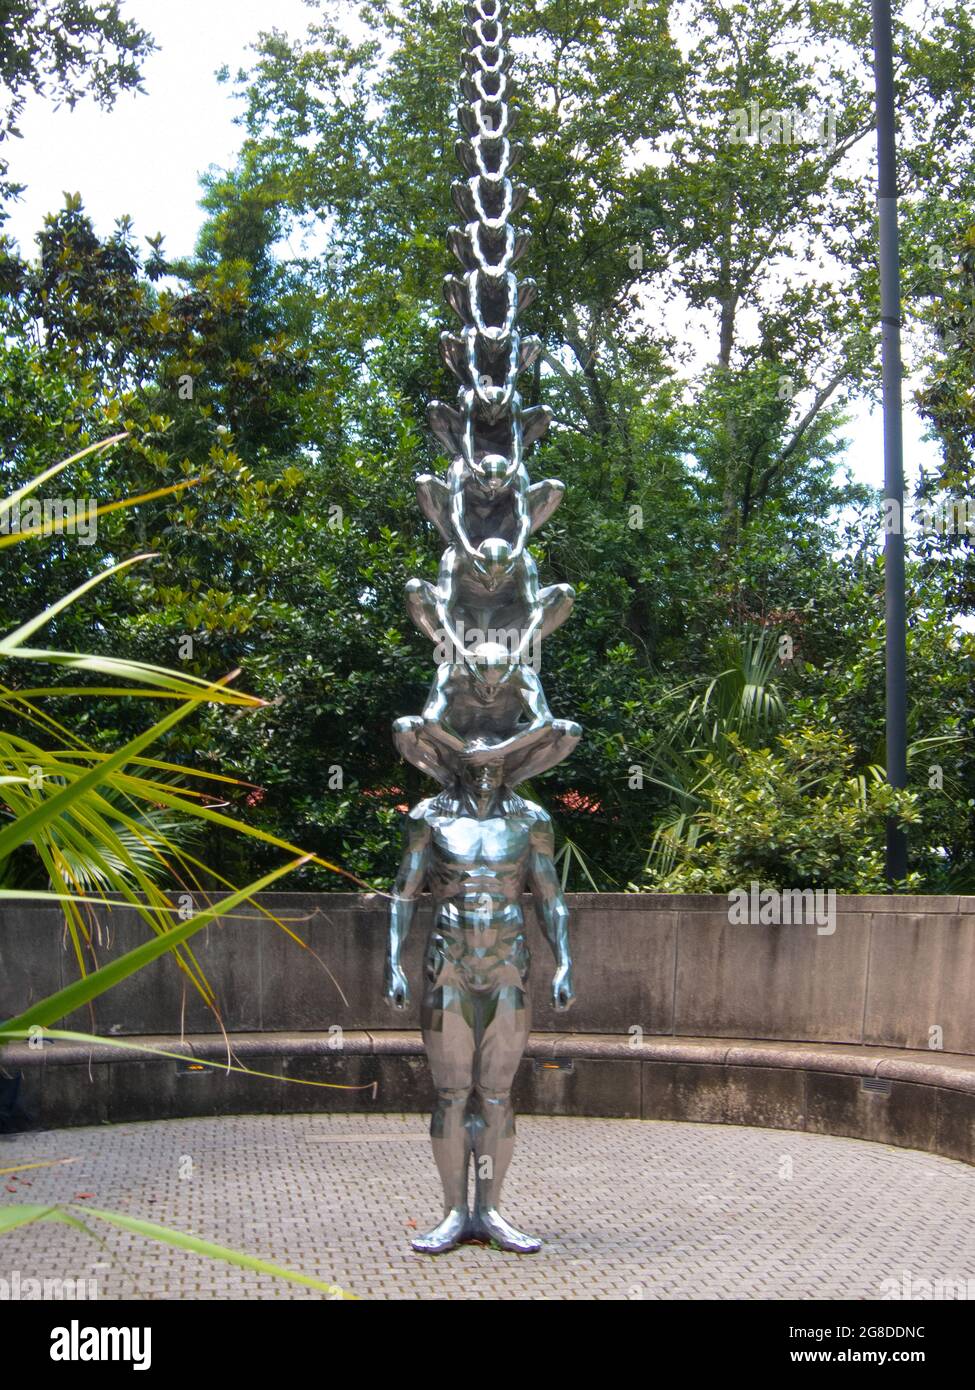 "Karma" dell'artista coreano Do ho Suh, nel New Orleans City Park Besthoff Sculpture Garden. Foto Stock